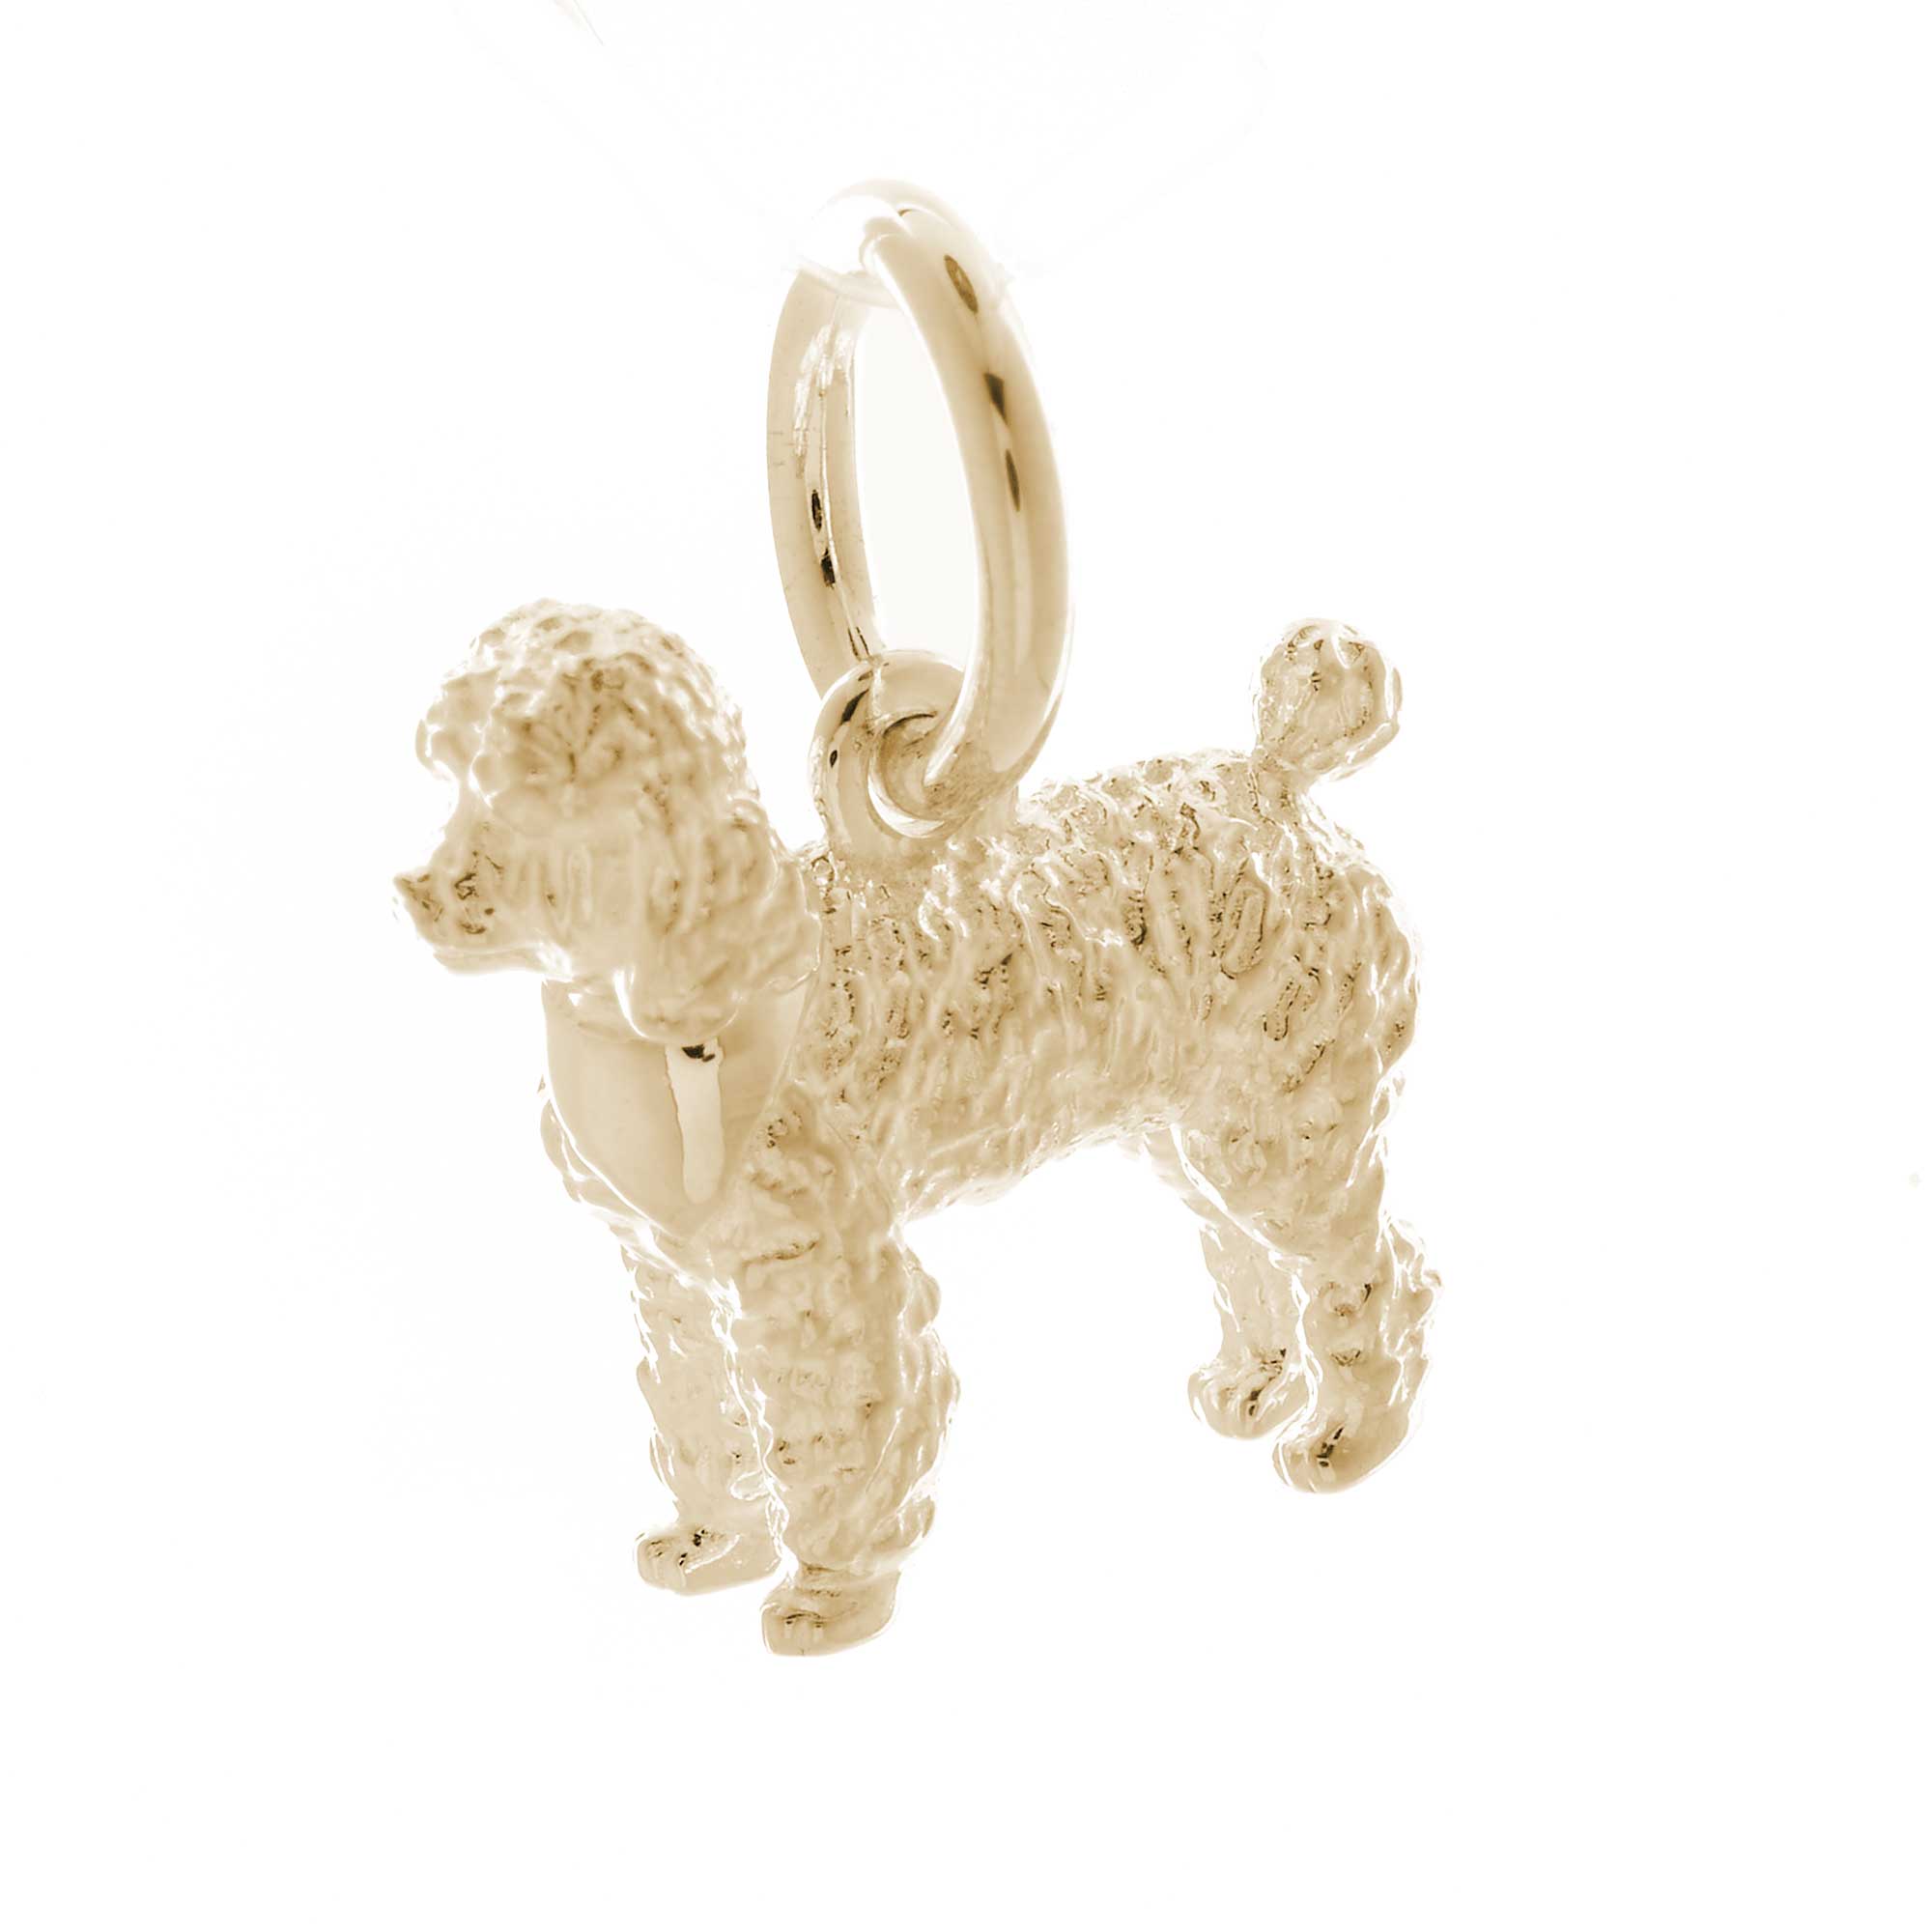 solid 9k gold poodle charm for traditional gold charm bracelet scarlett jewellery UK